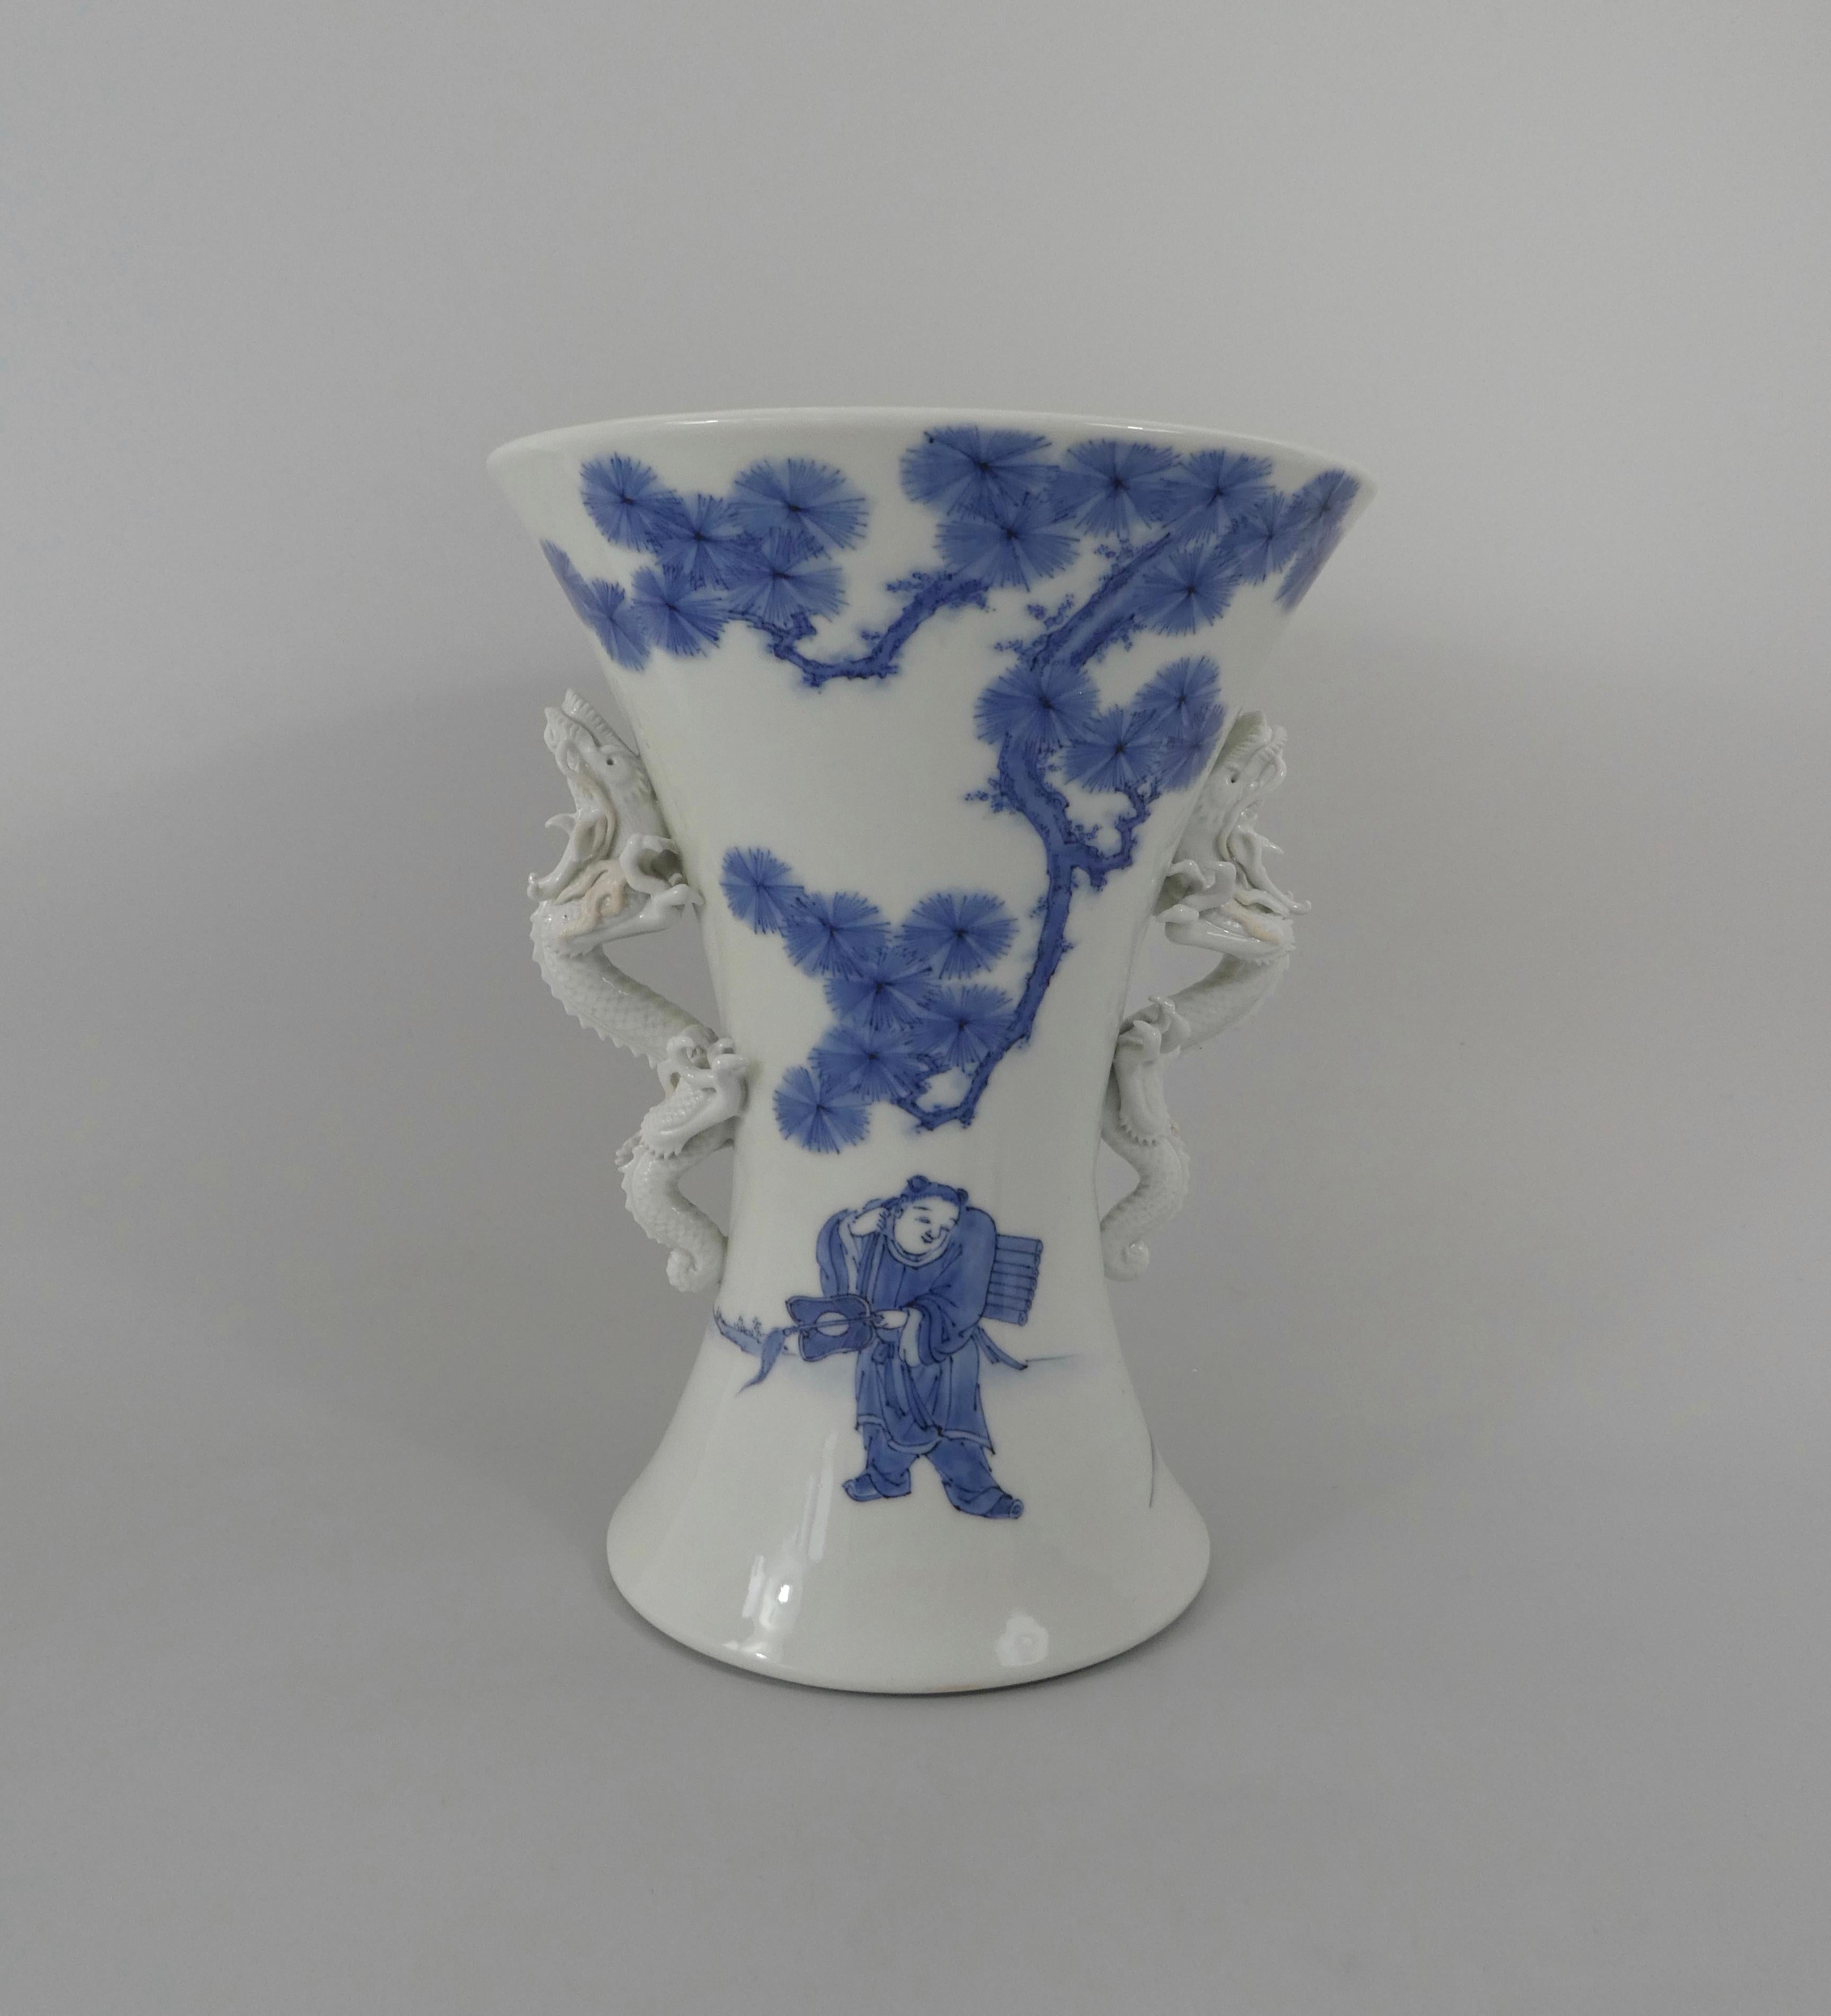 Fired Hirado Porcelain Vase, Japanese, Meiji Period, 1868 -1912